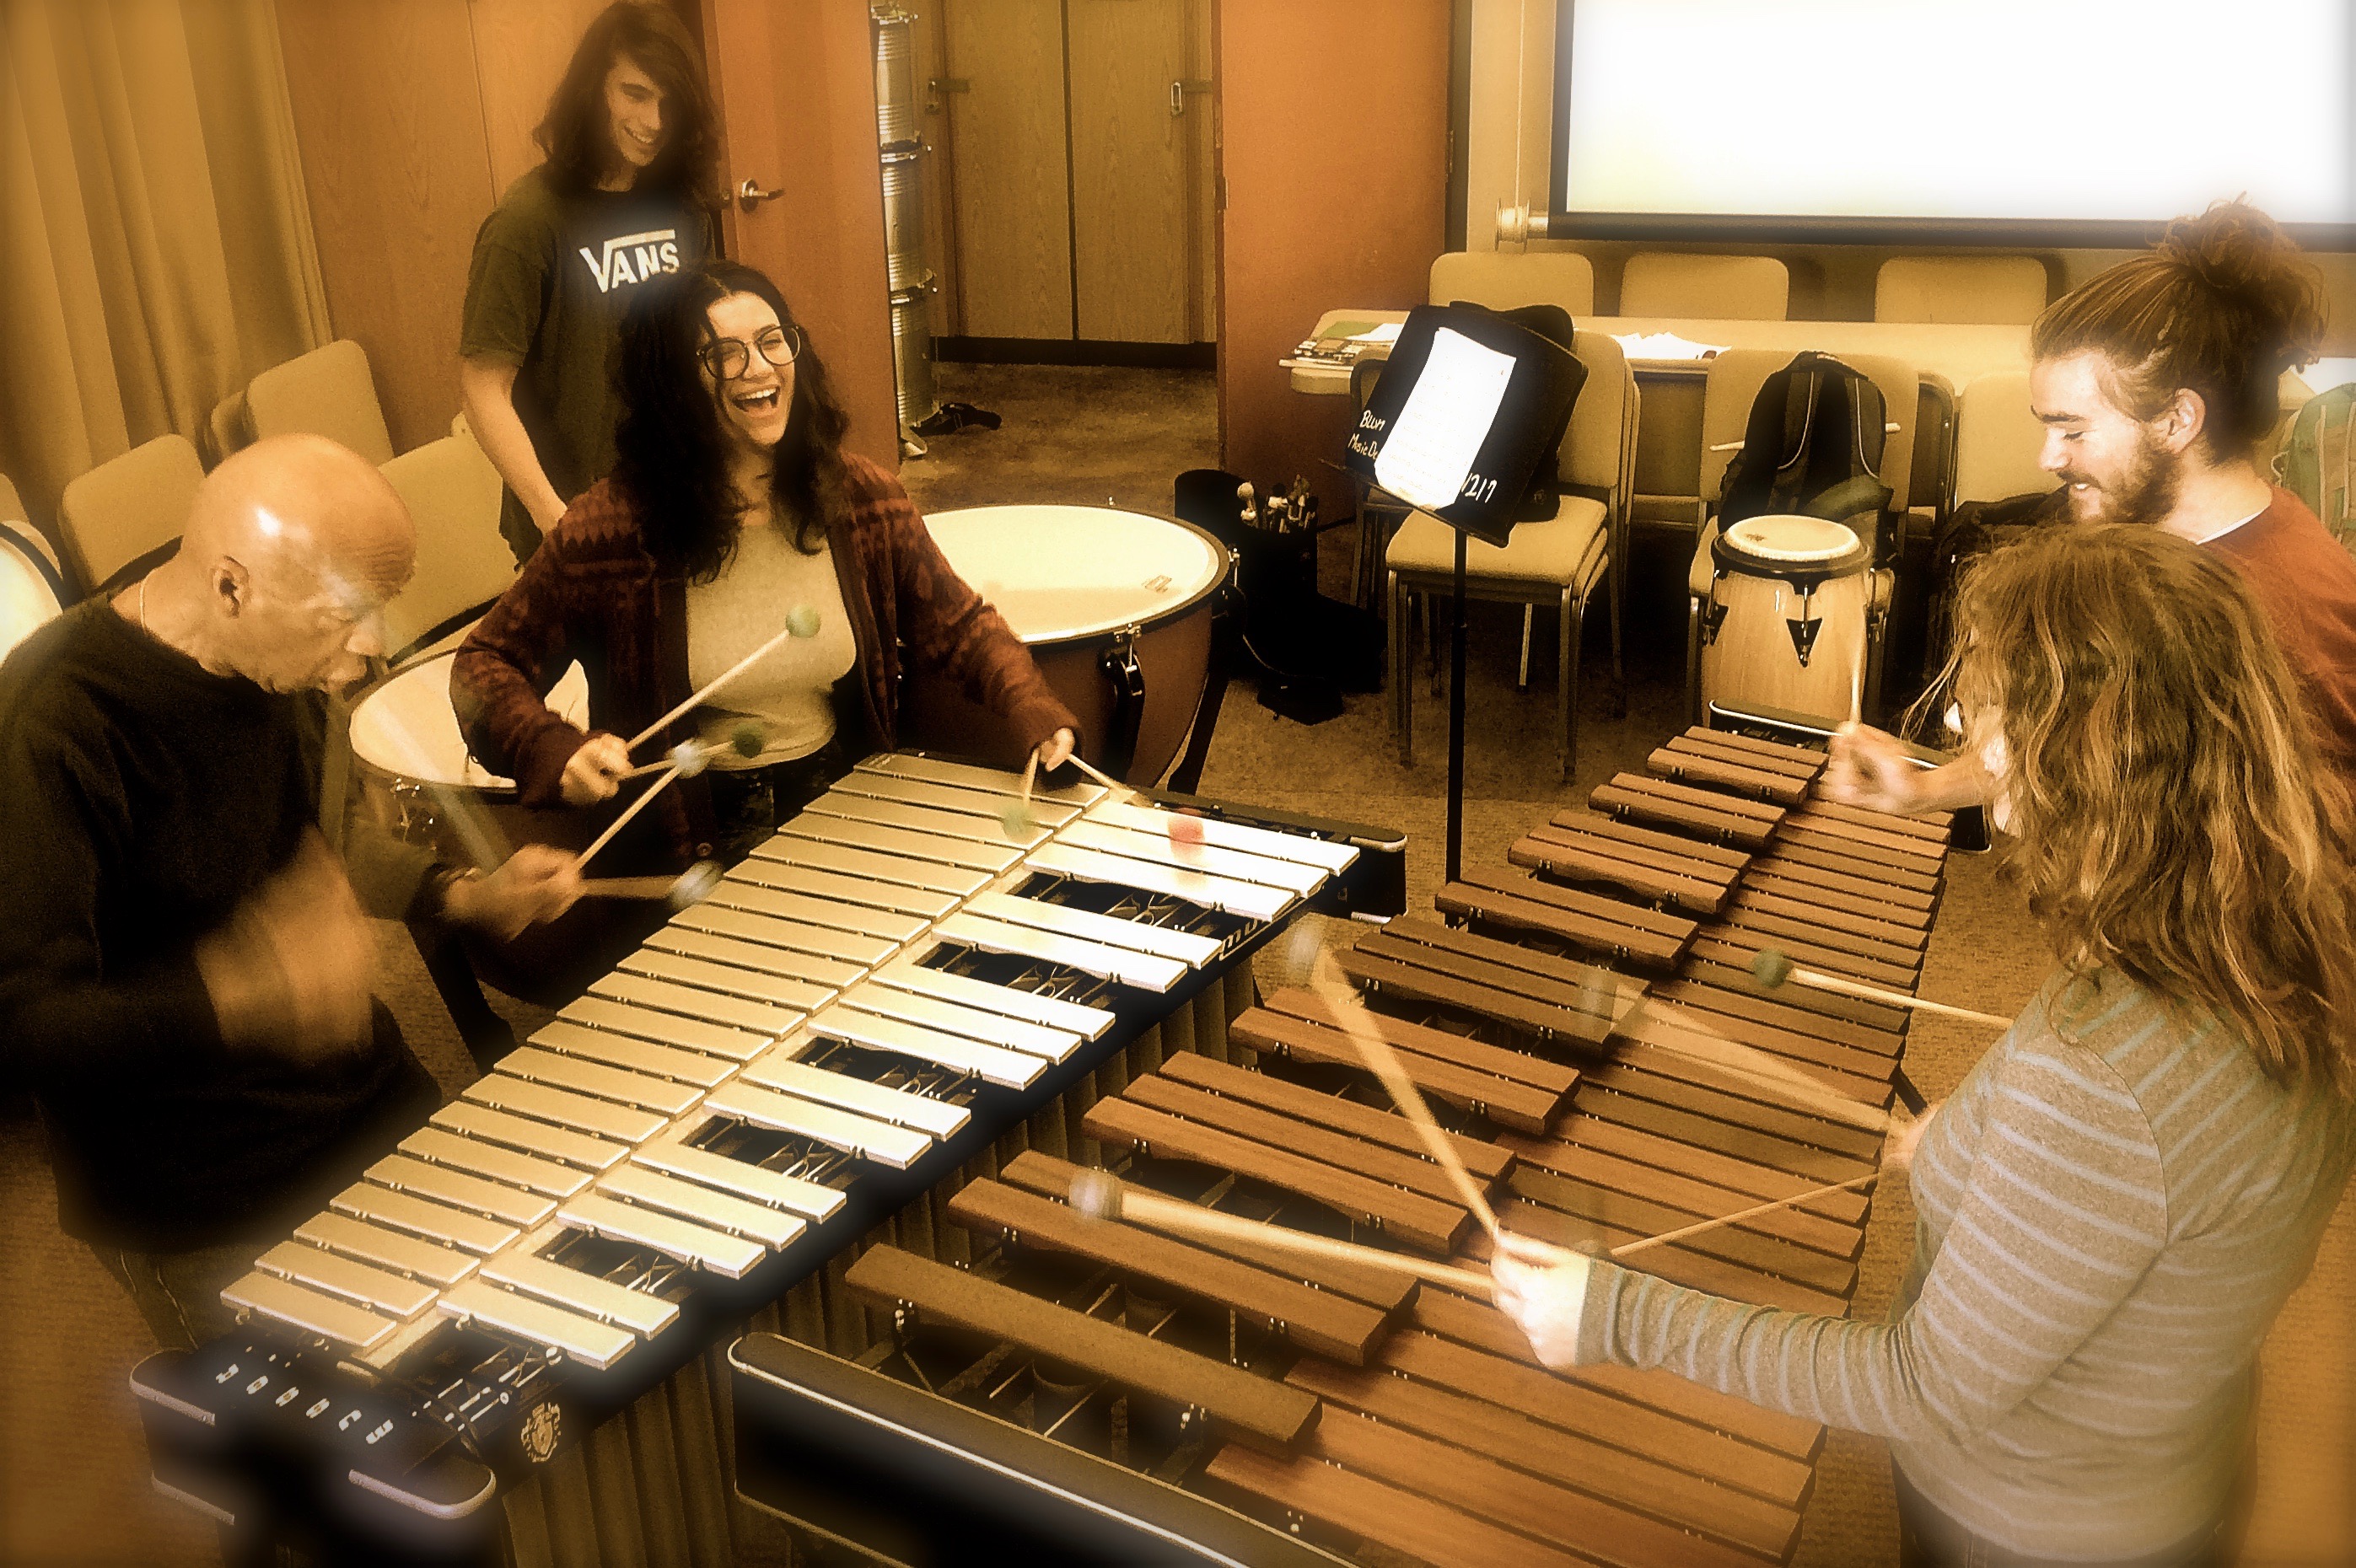 The Bard College Percussion Ensemble